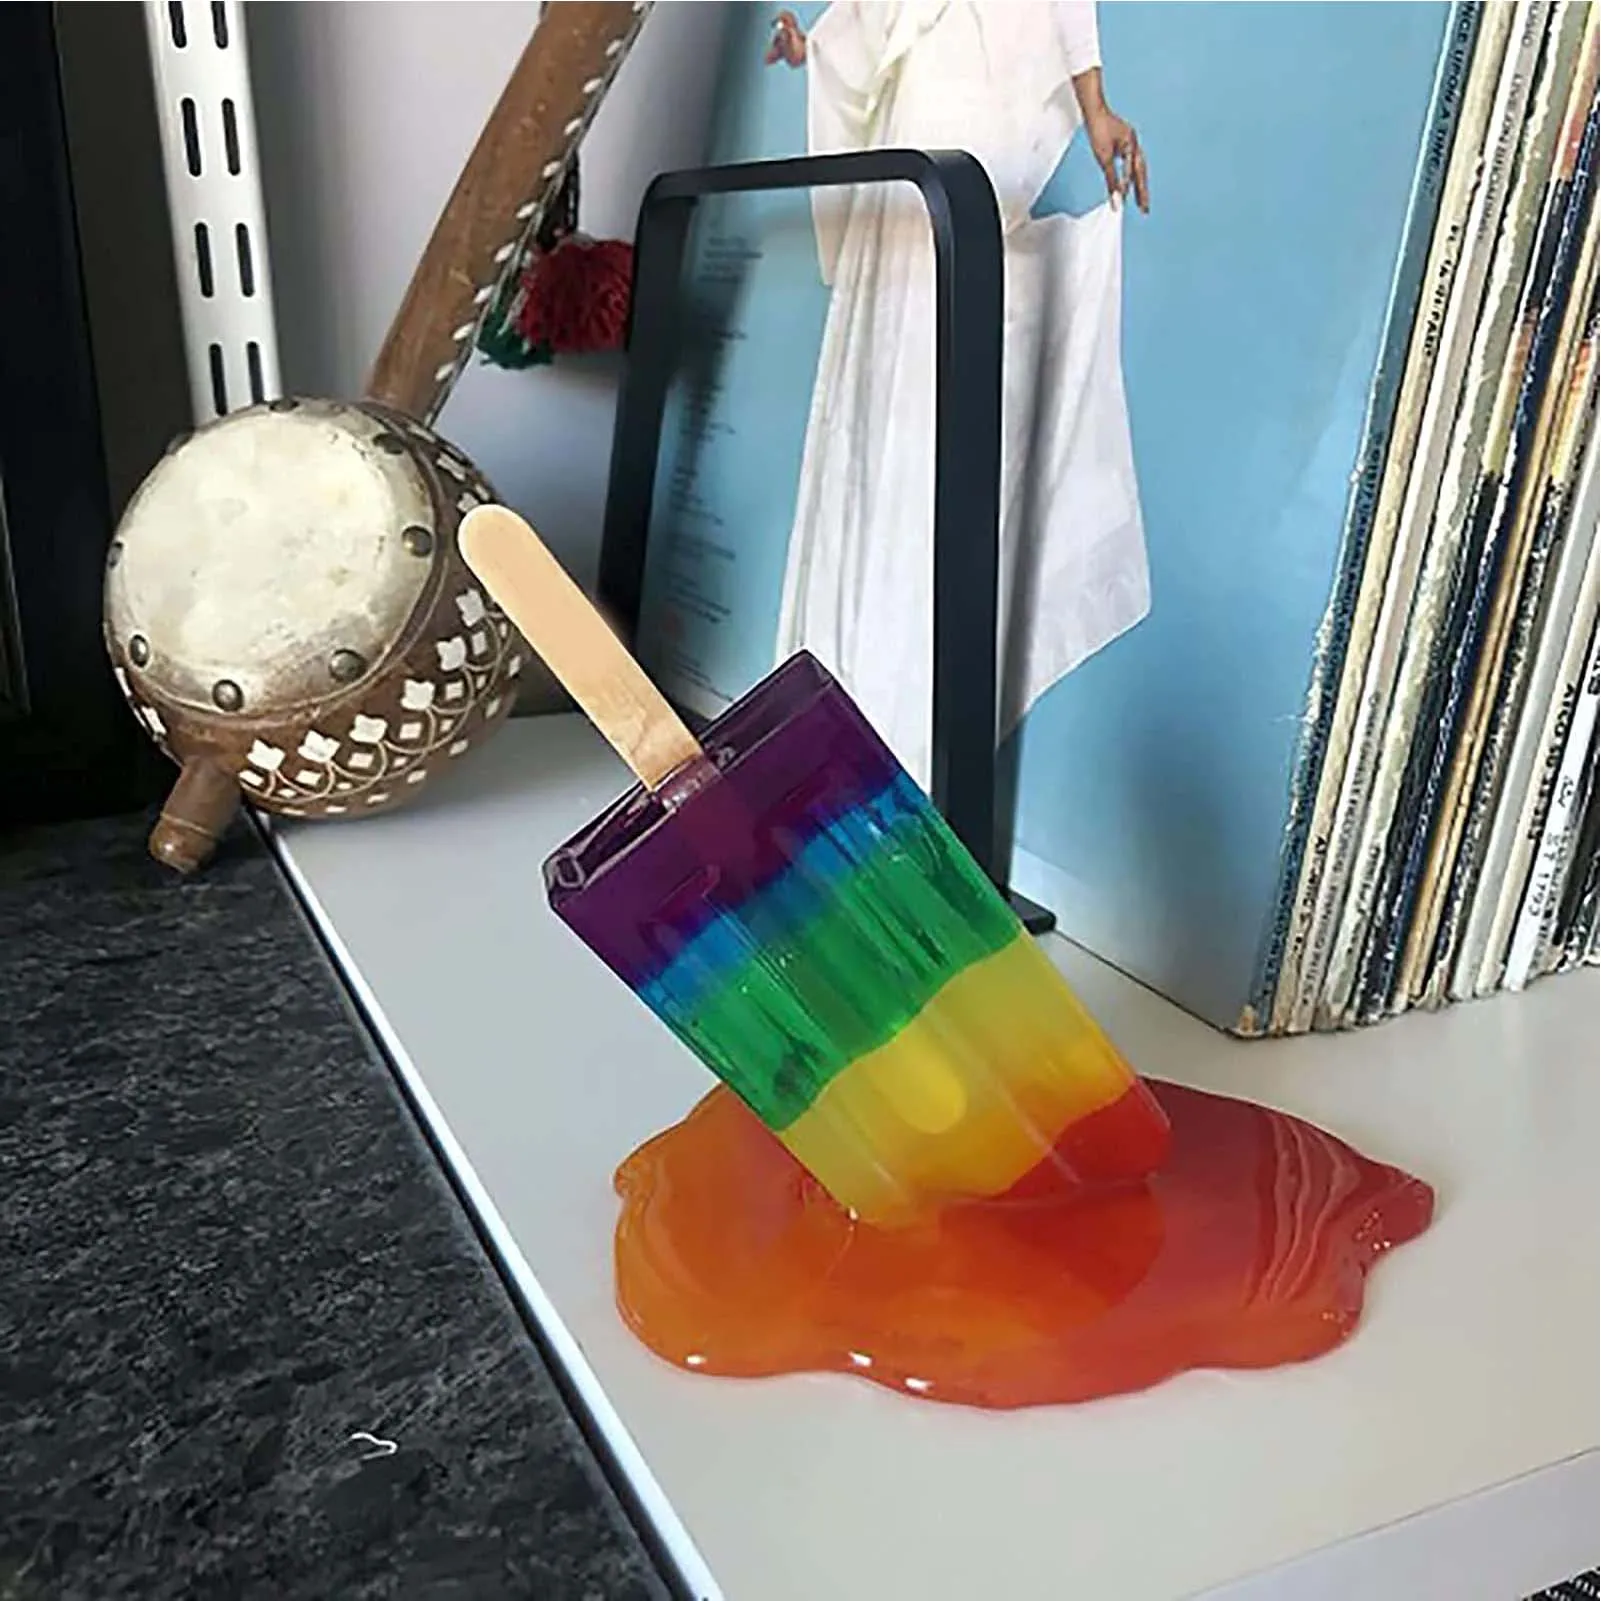 

Rainbow Melting Popsicle Sculpture Decoration Miniature Resin Craft Popsicles Ice Cream Accessories Summer Home Garden Decor